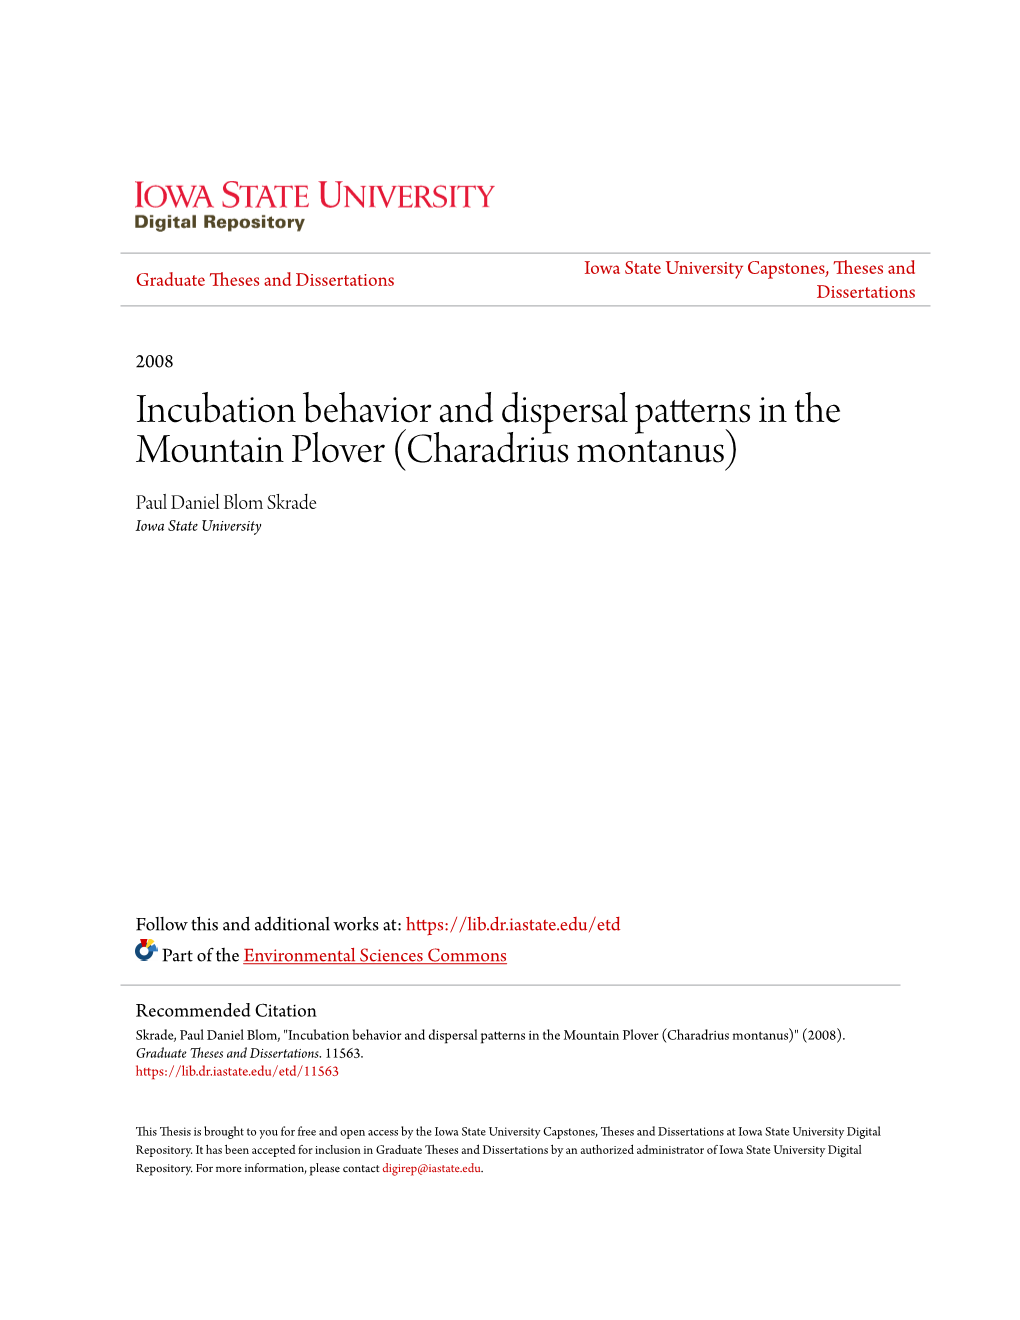 Incubation Behavior and Dispersal Patterns in the Mountain Plover (Charadrius Montanus) Paul Daniel Blom Skrade Iowa State University